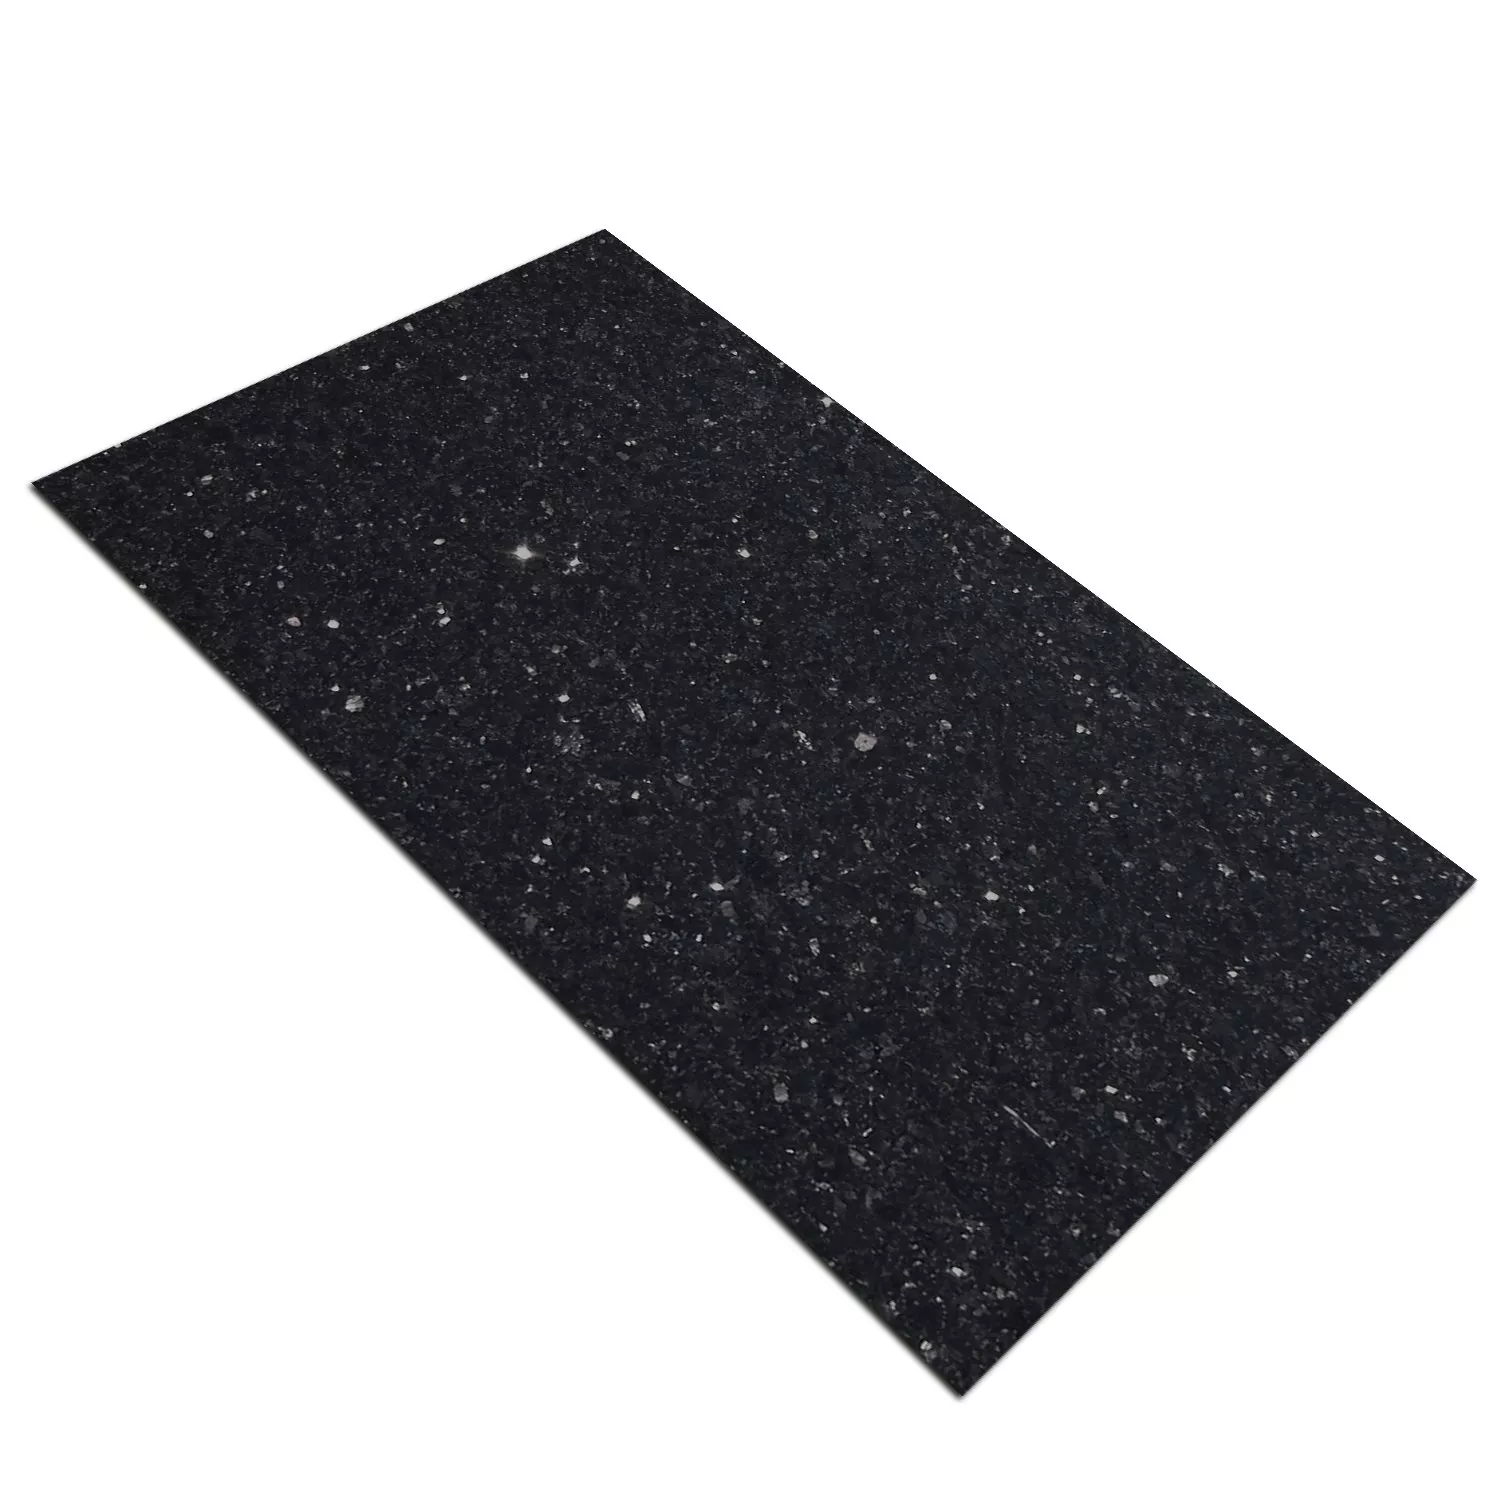 Placi De Piatra Naturala Granit Star Galaxy Lustruit 30,5x61cm